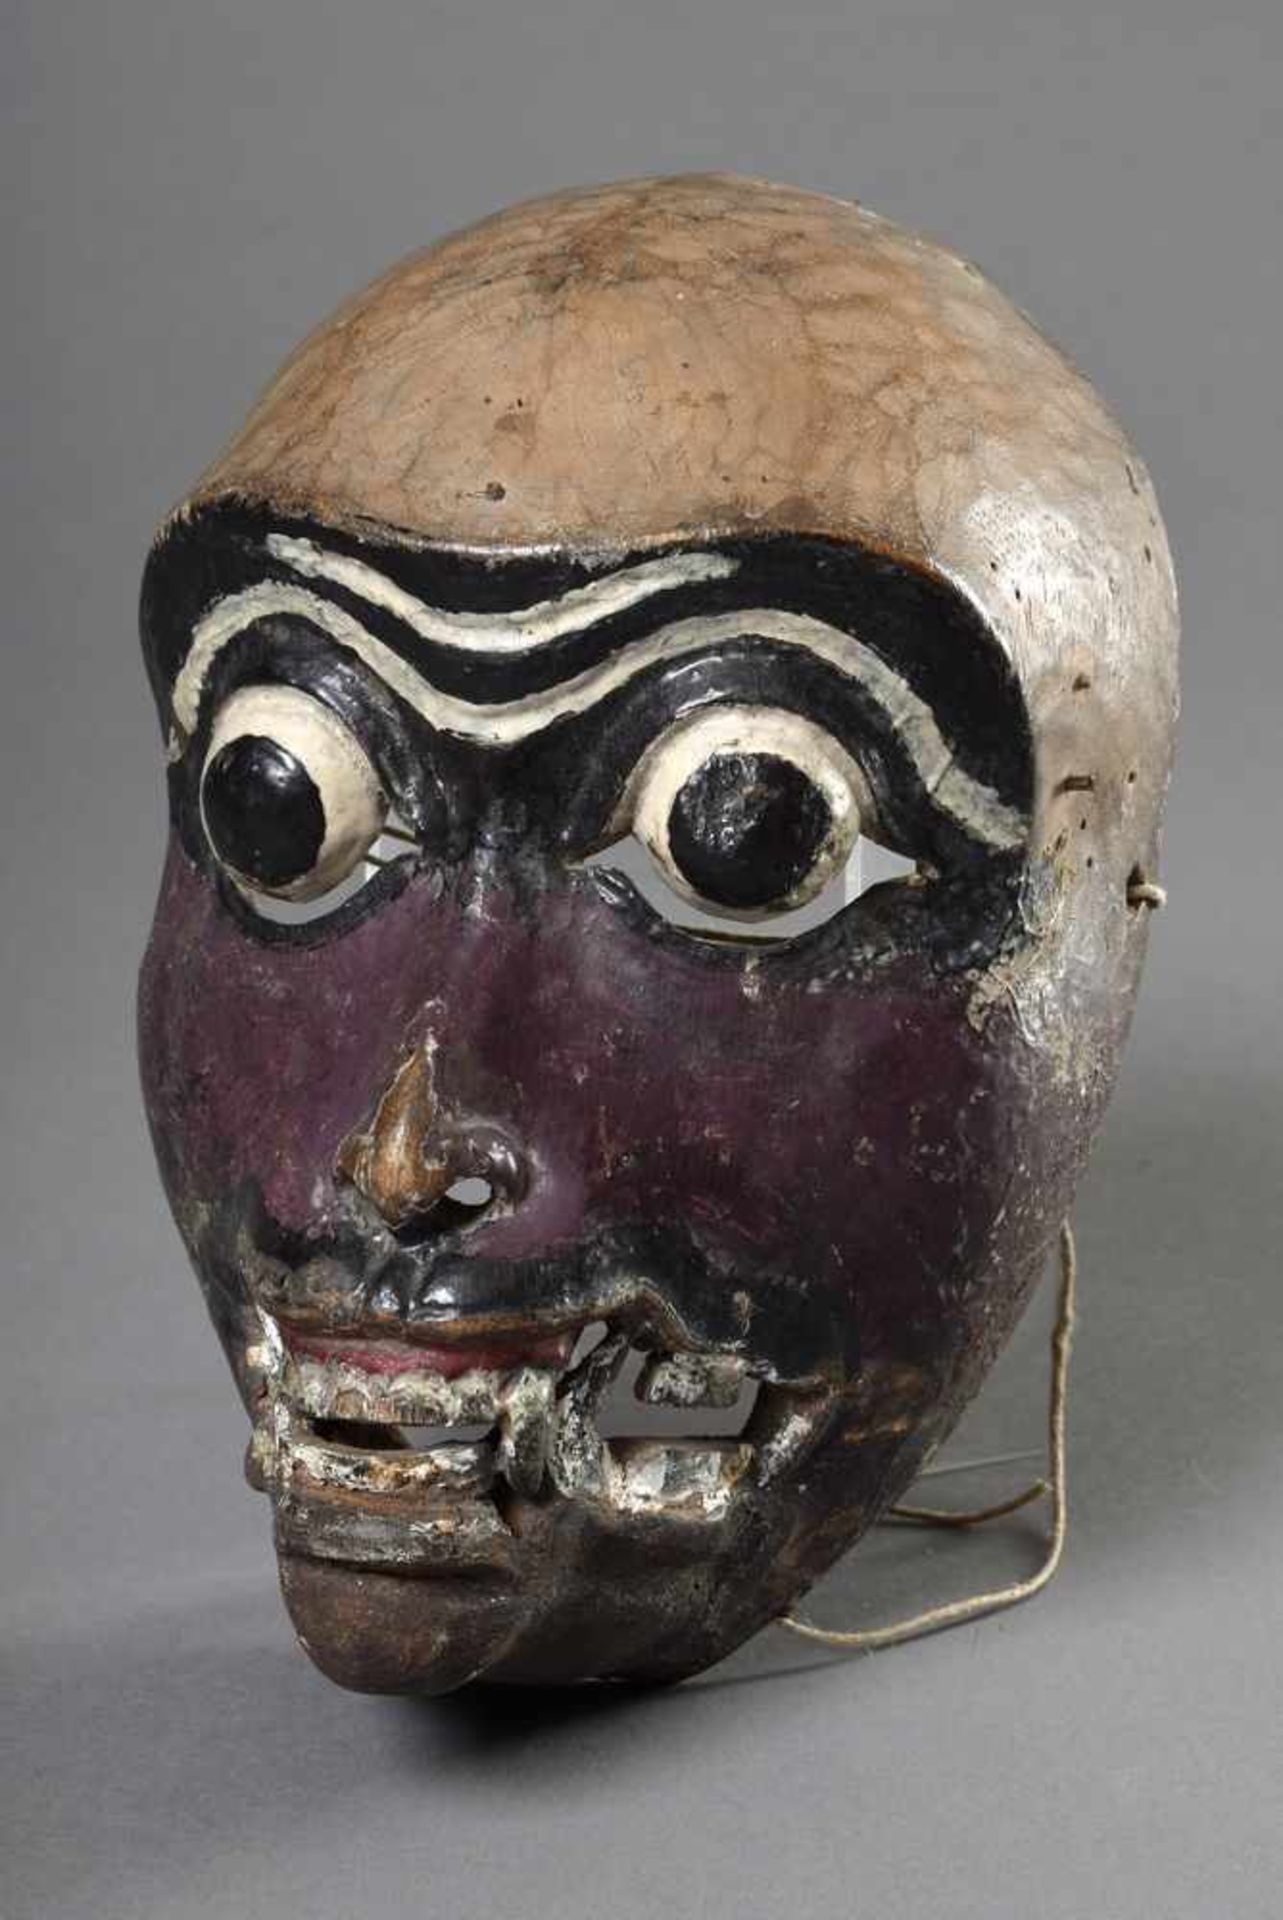 Maske "Affe", Holz, farbig gefasst, Lombok, Indonesien, 19x13cm, etw. ber./best., erworben 1977 in